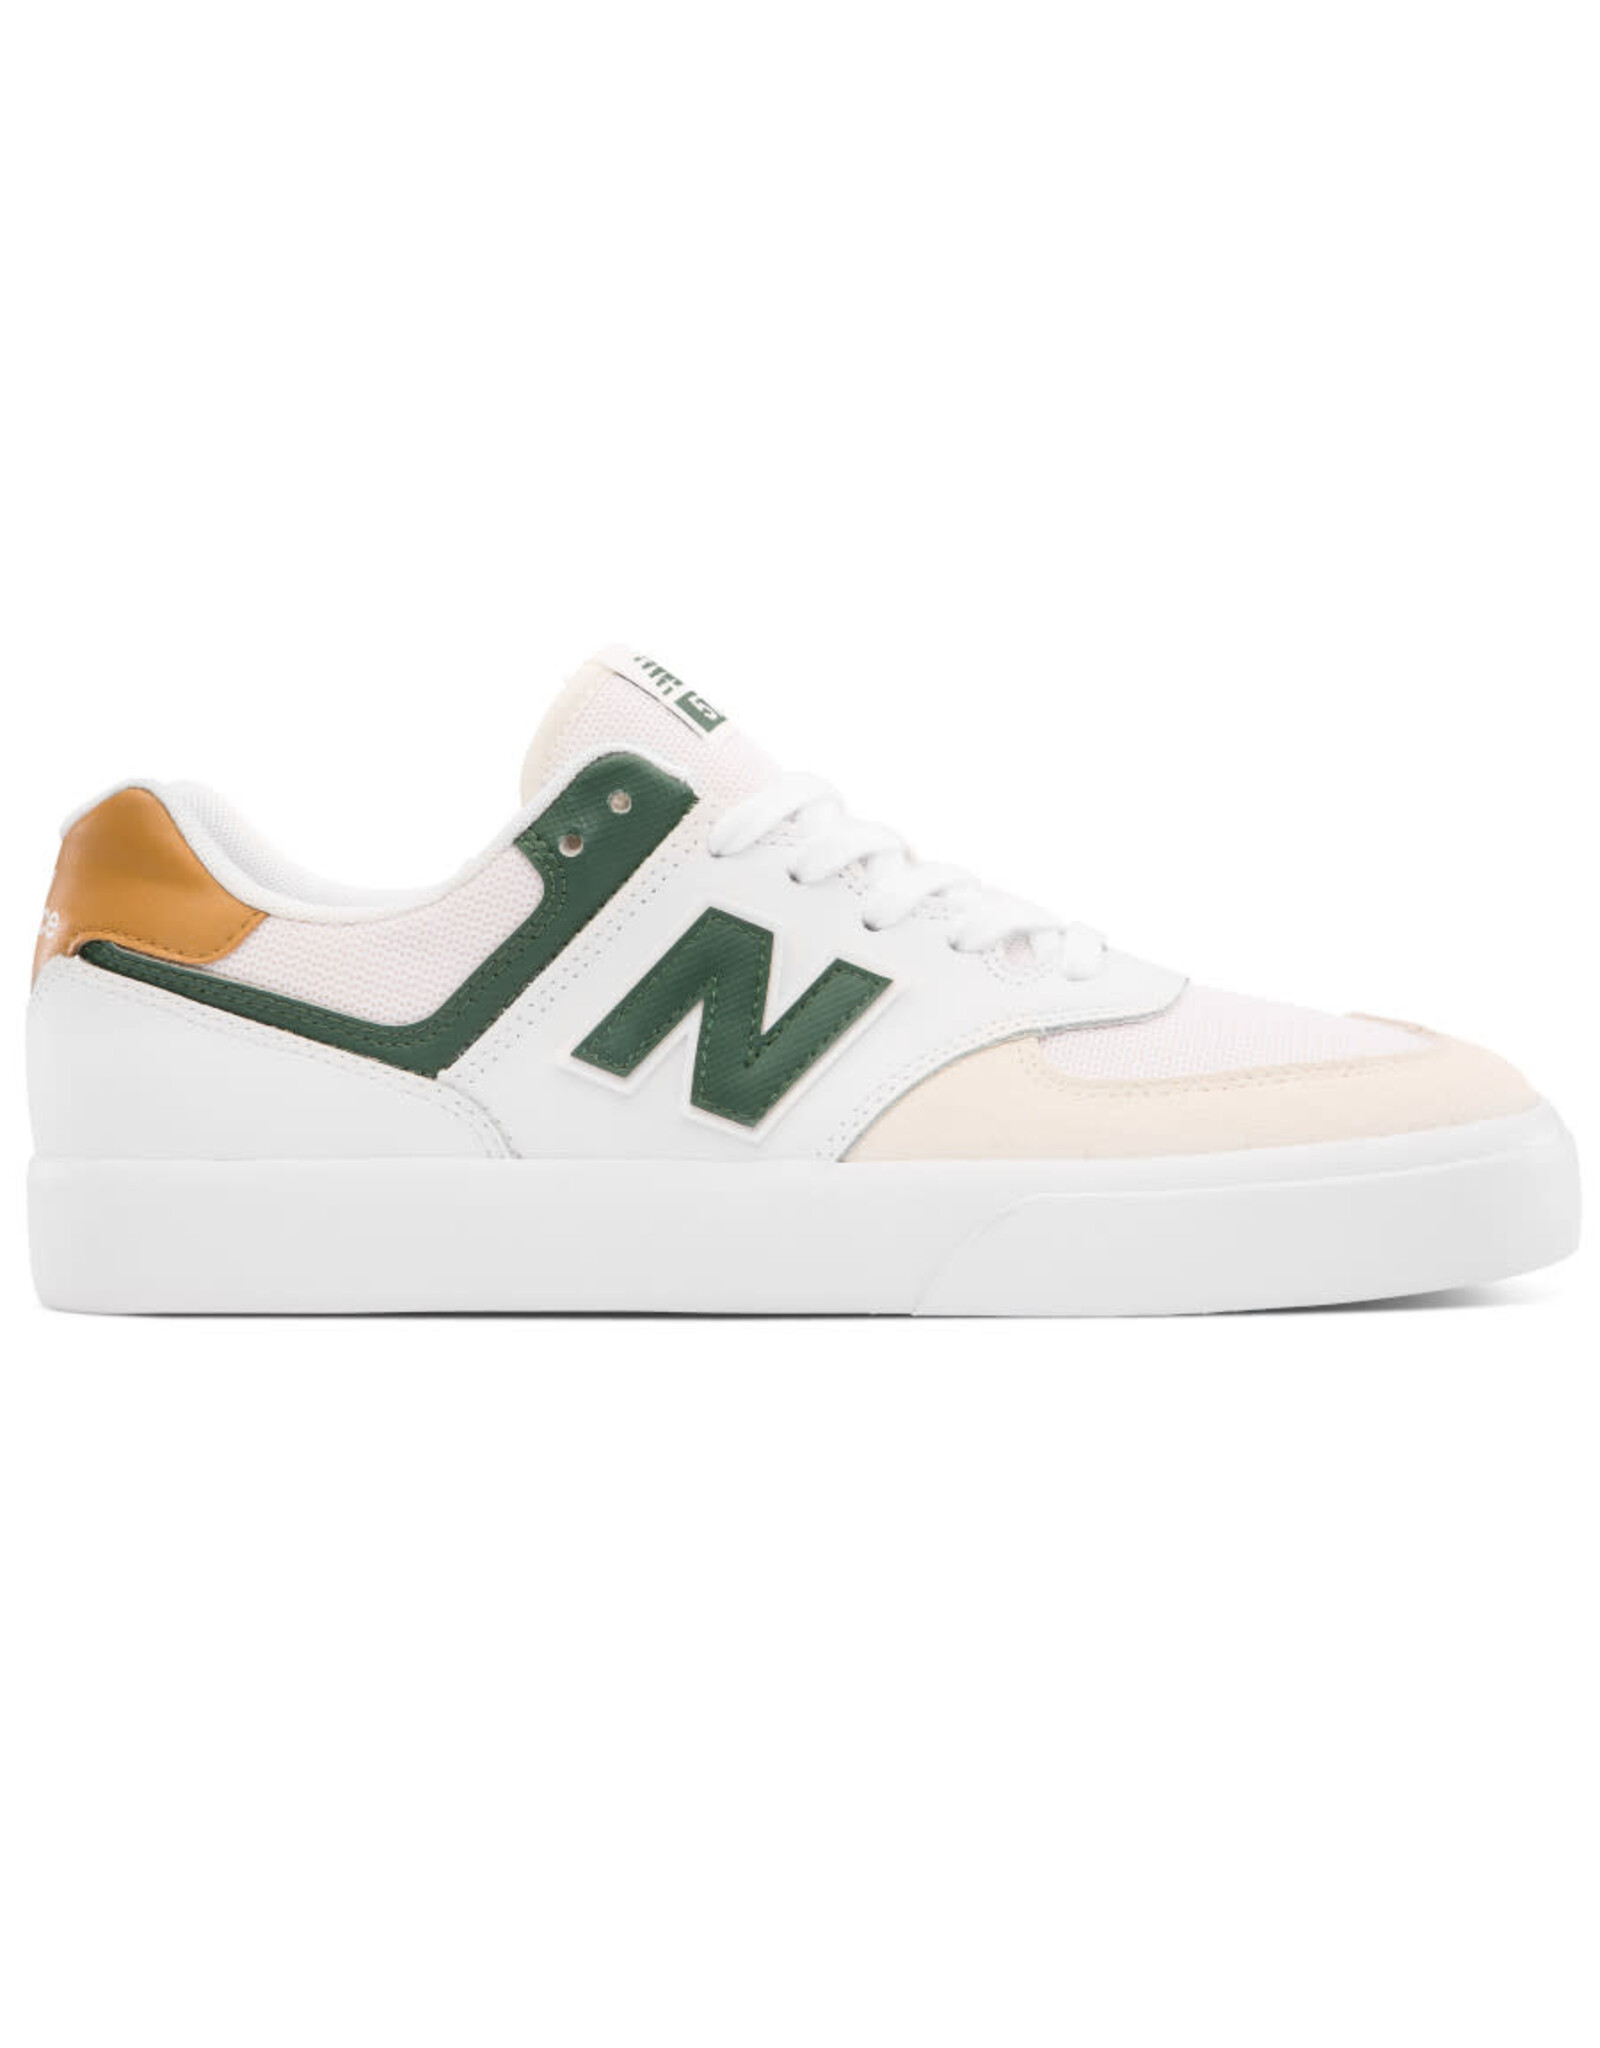 New Balance Numeric New Balance Numeric Shoe 574 Vulc (White/Nightwatch Green)